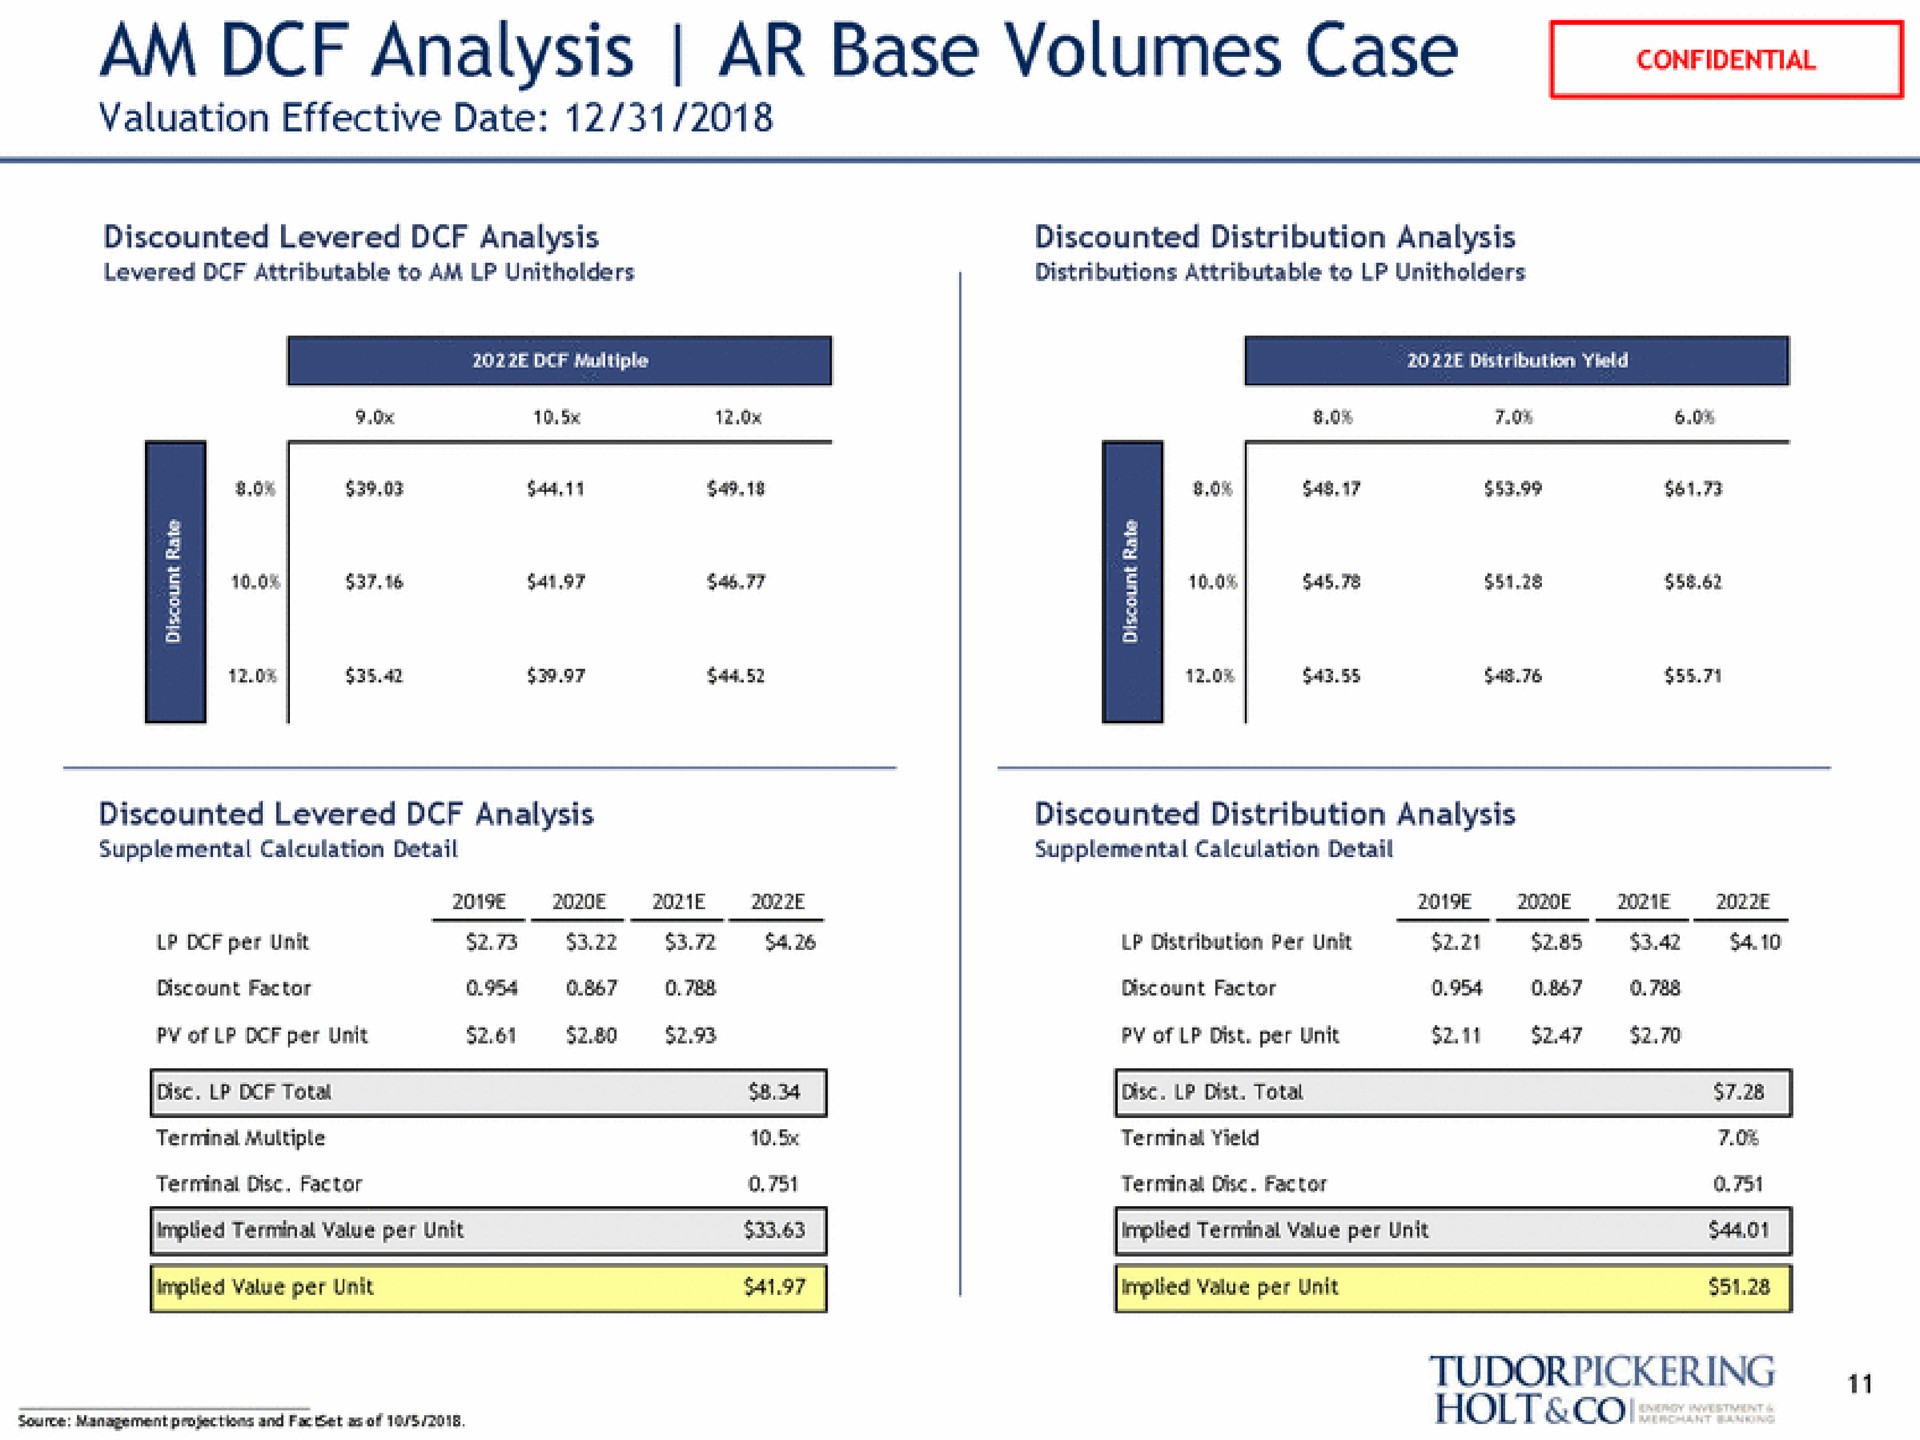 am analysis base volumes case a holt | Tudor, Pickering, Holt & Co